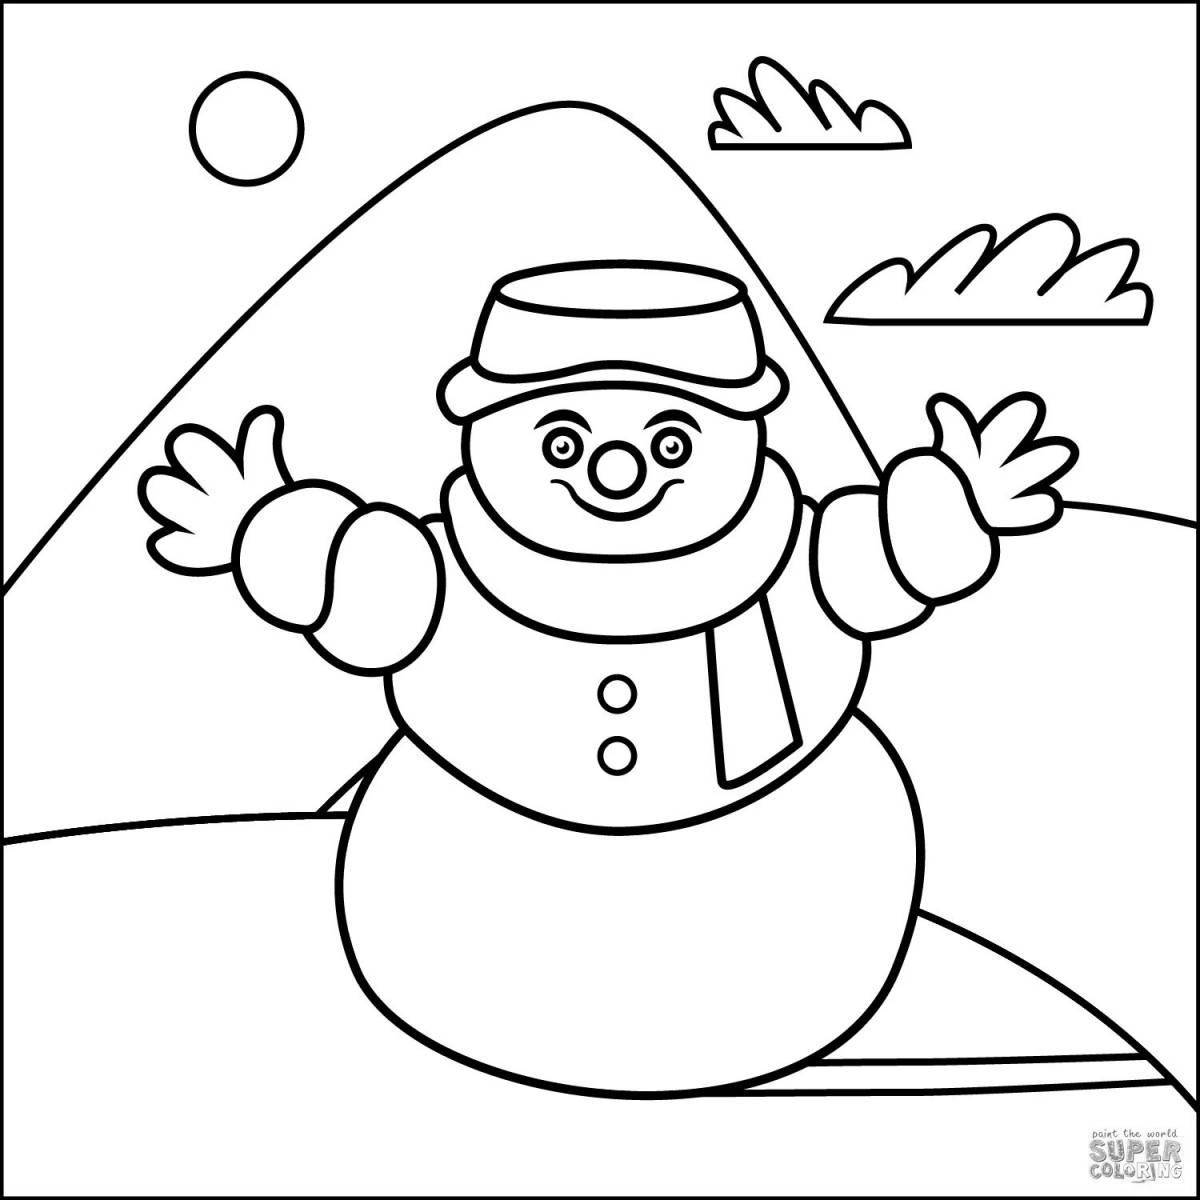 Sledding snowman #1